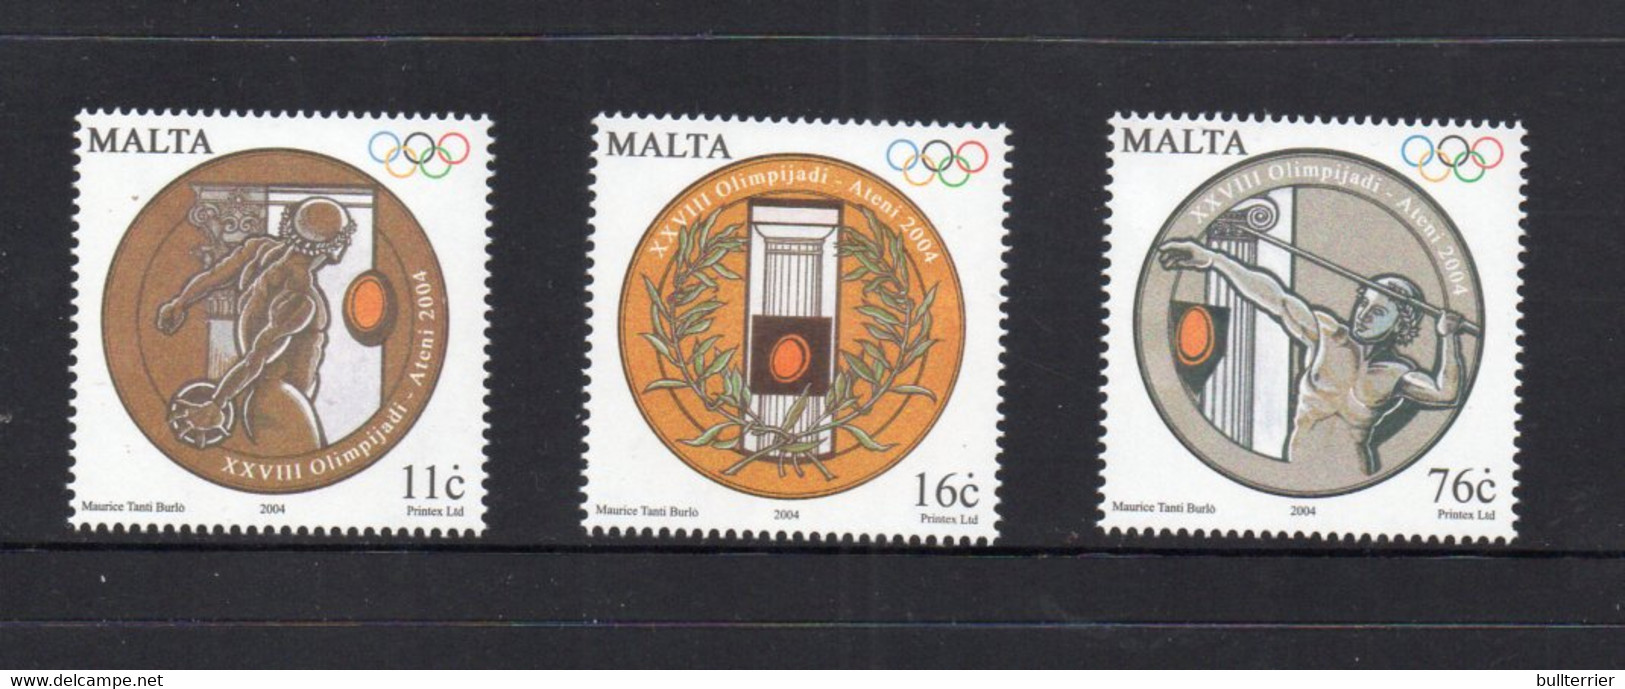 OLYMPICS  - MALTA - 2004 - ATHENS OLYMPICS SET OF 3  MINT NEVER HINGED - Eté 2004: Athènes - Paralympic